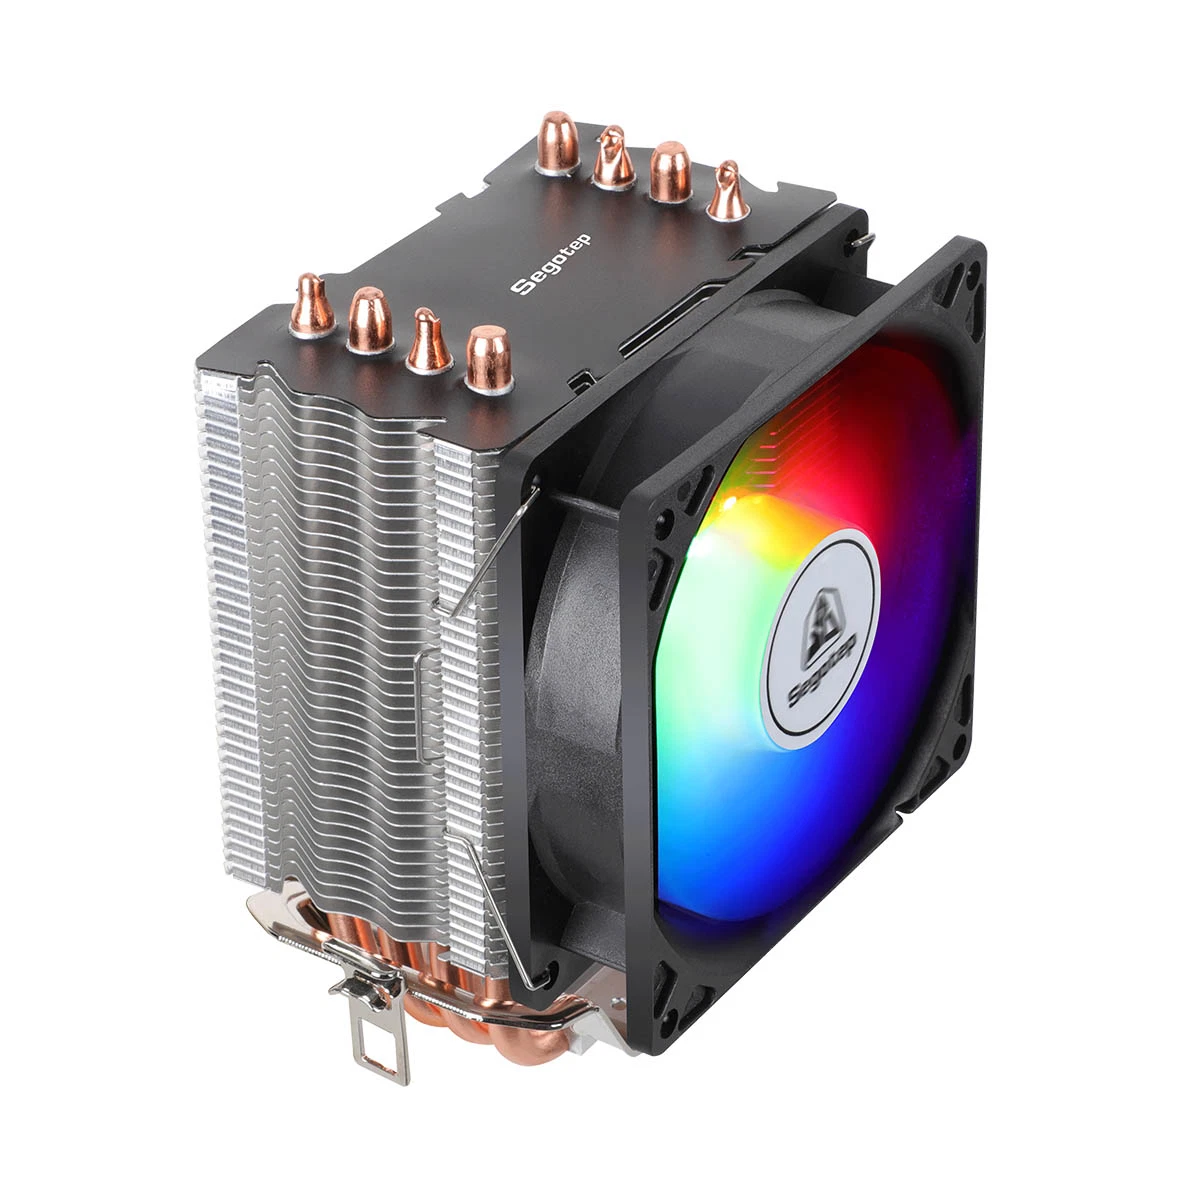 5V Motherboard Argb Sync 16.8 Million Colors Intel CPU Cooler